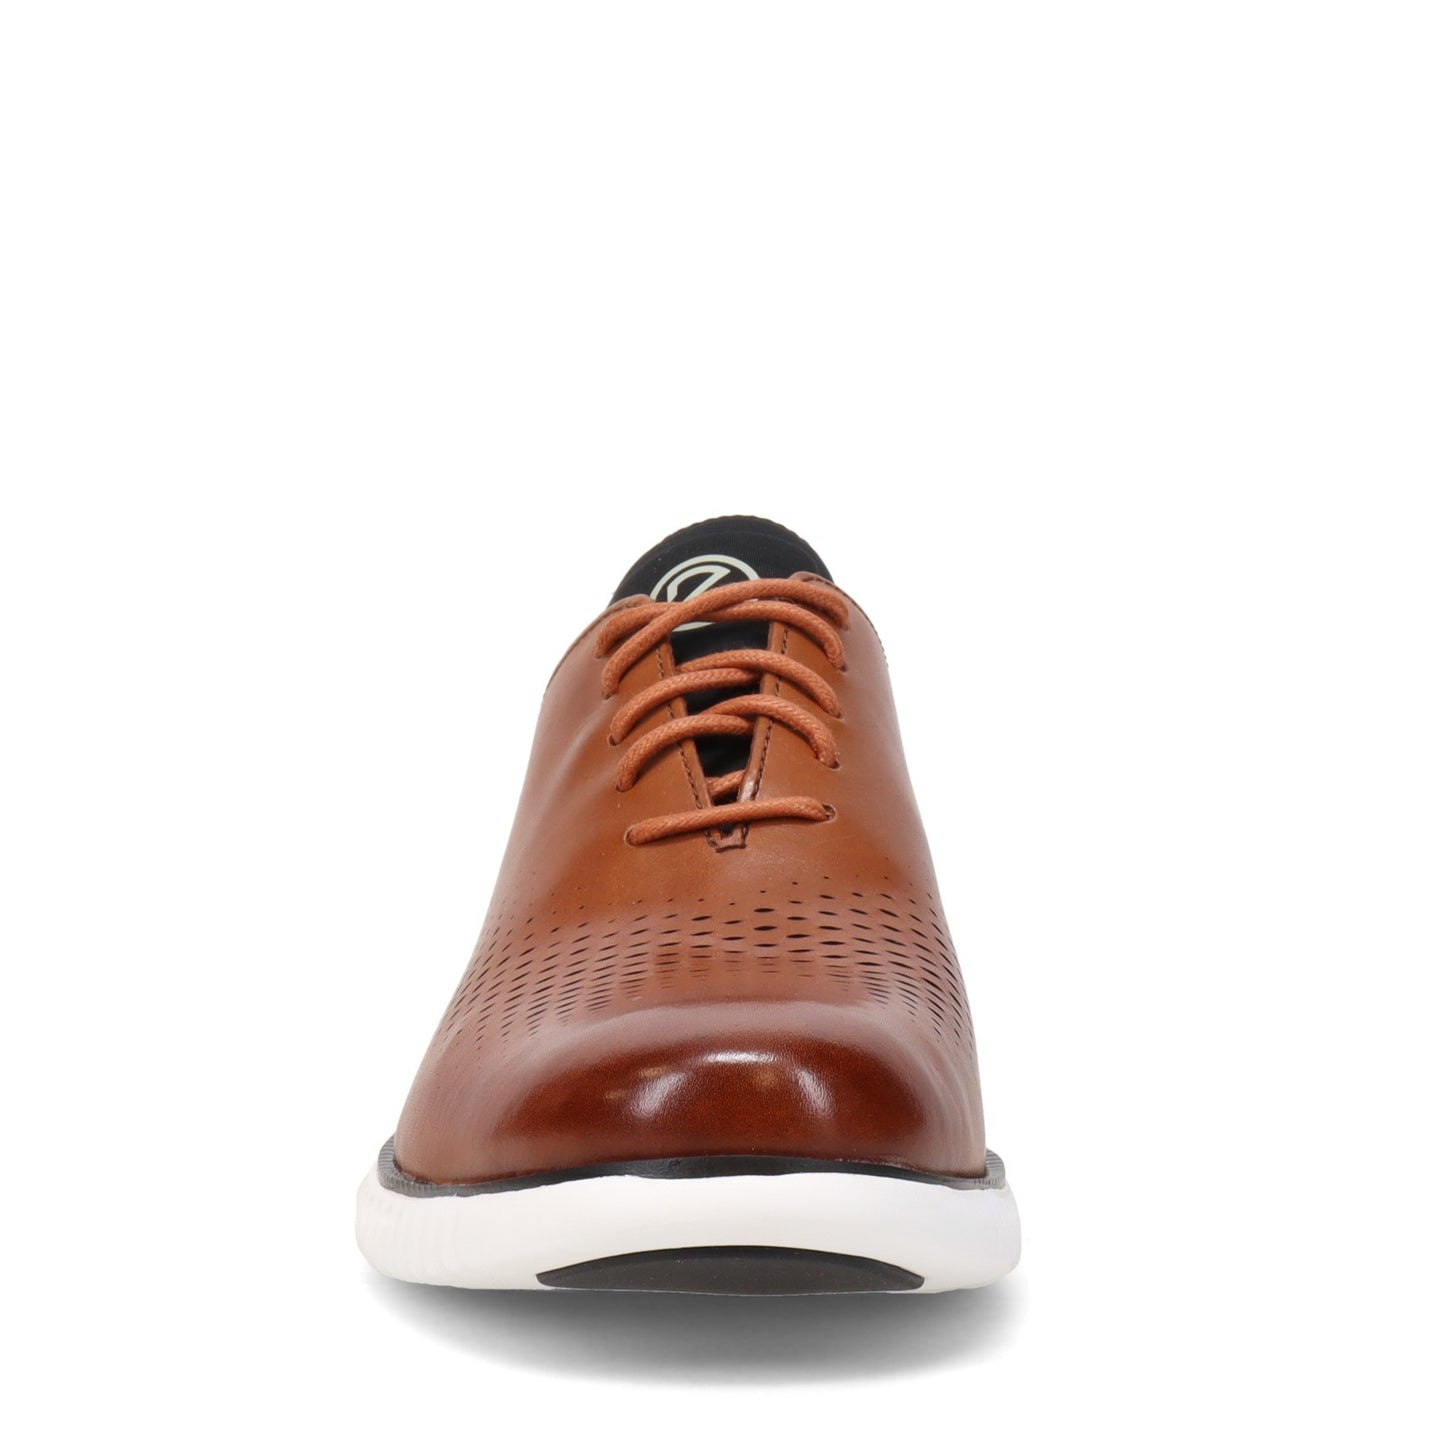 Peltz Shoes  Men's Cole Haan 2.ZEROGRAND Laser Oxford Tan/White C27879